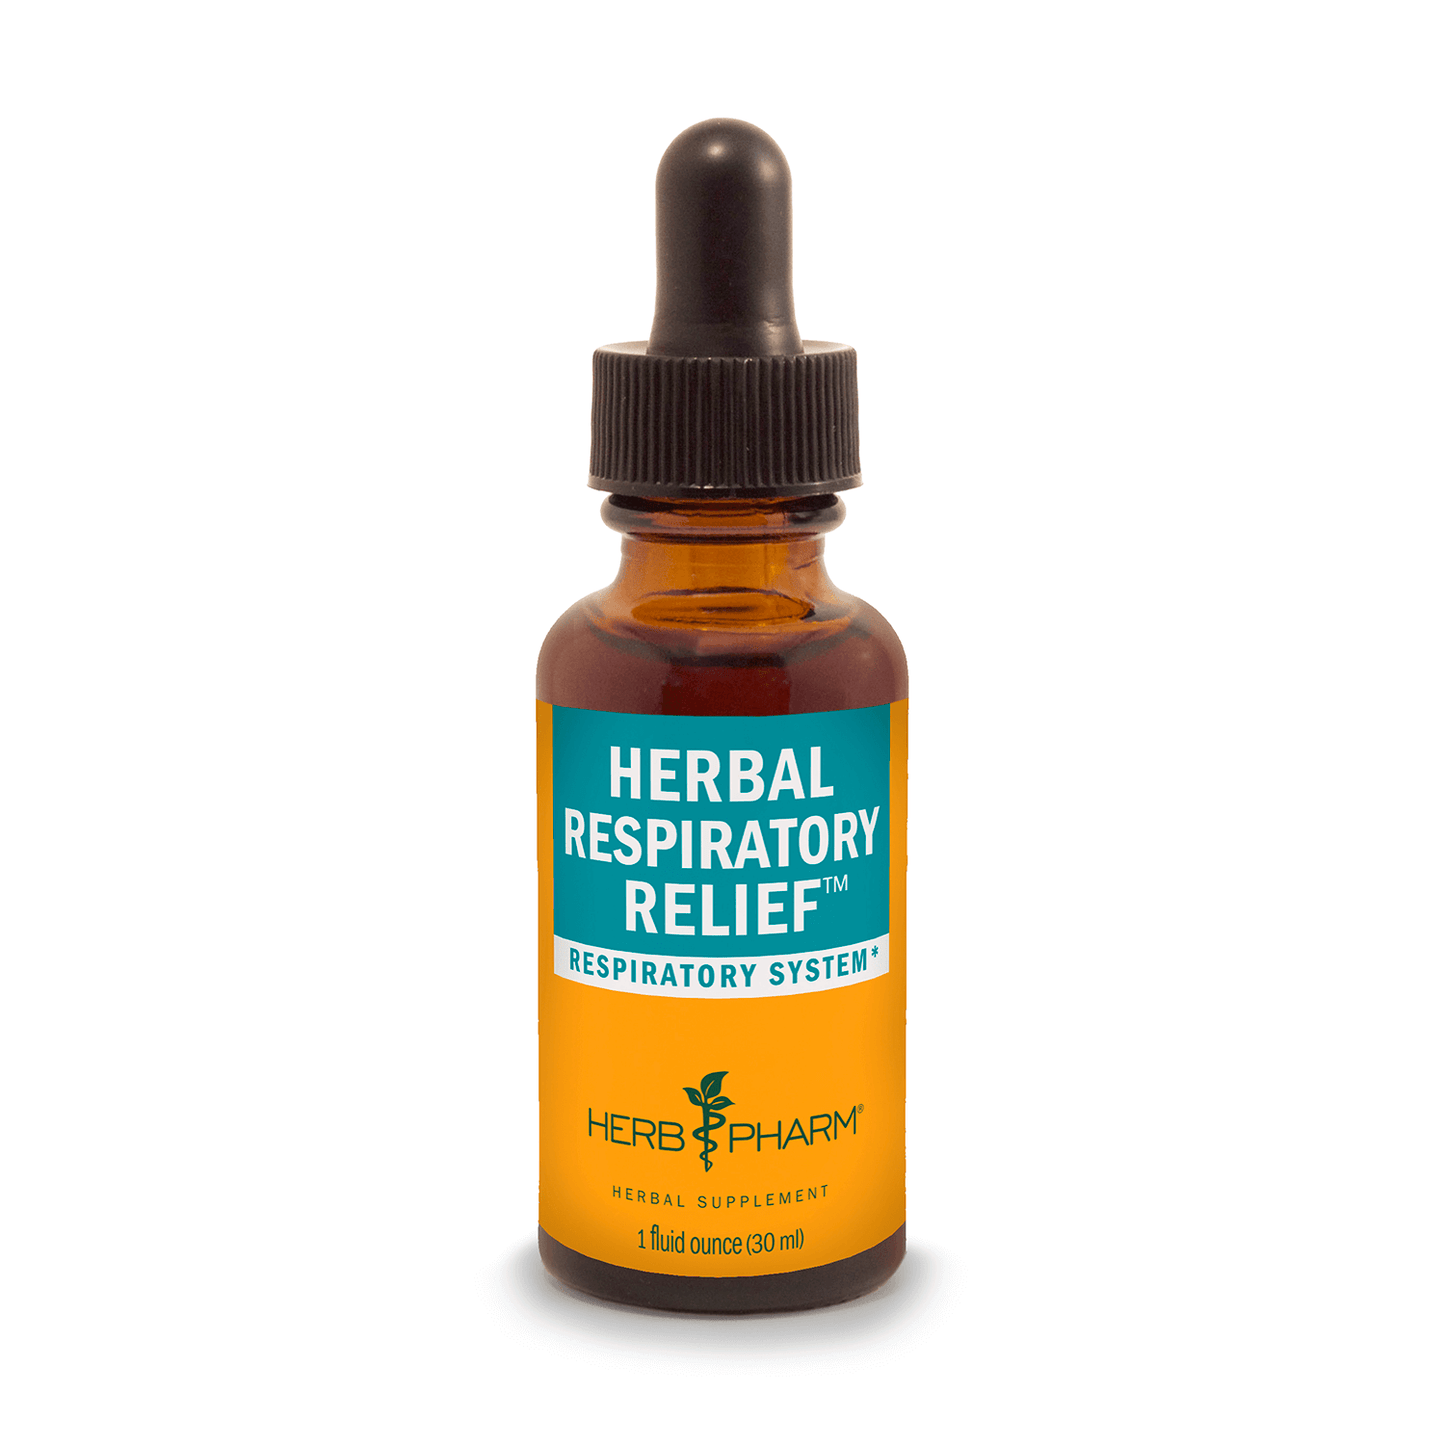 Herbal Respiratory Relief™